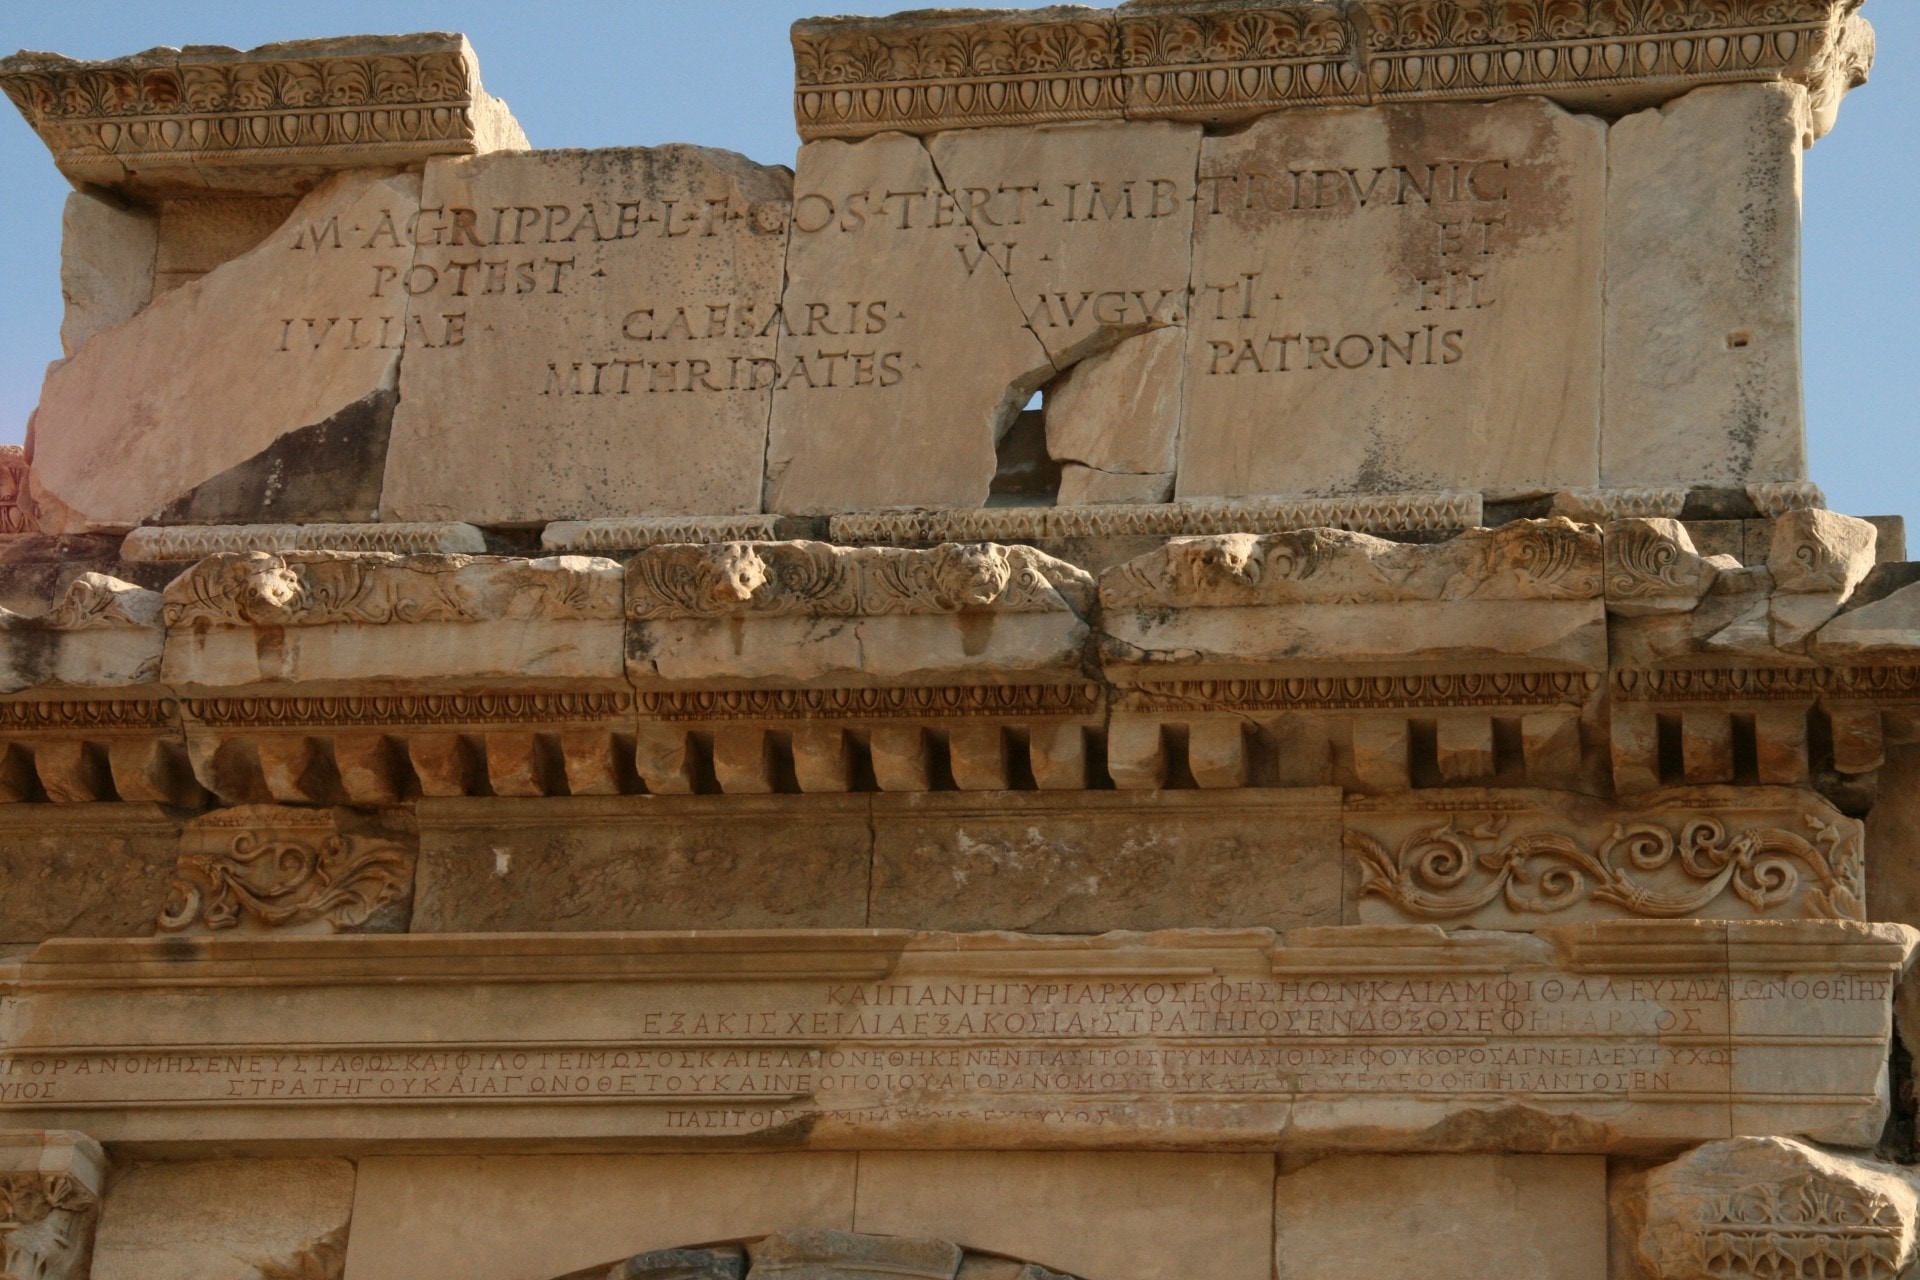 Writing, Turkey, Ephesus, Landmark, architecture, history